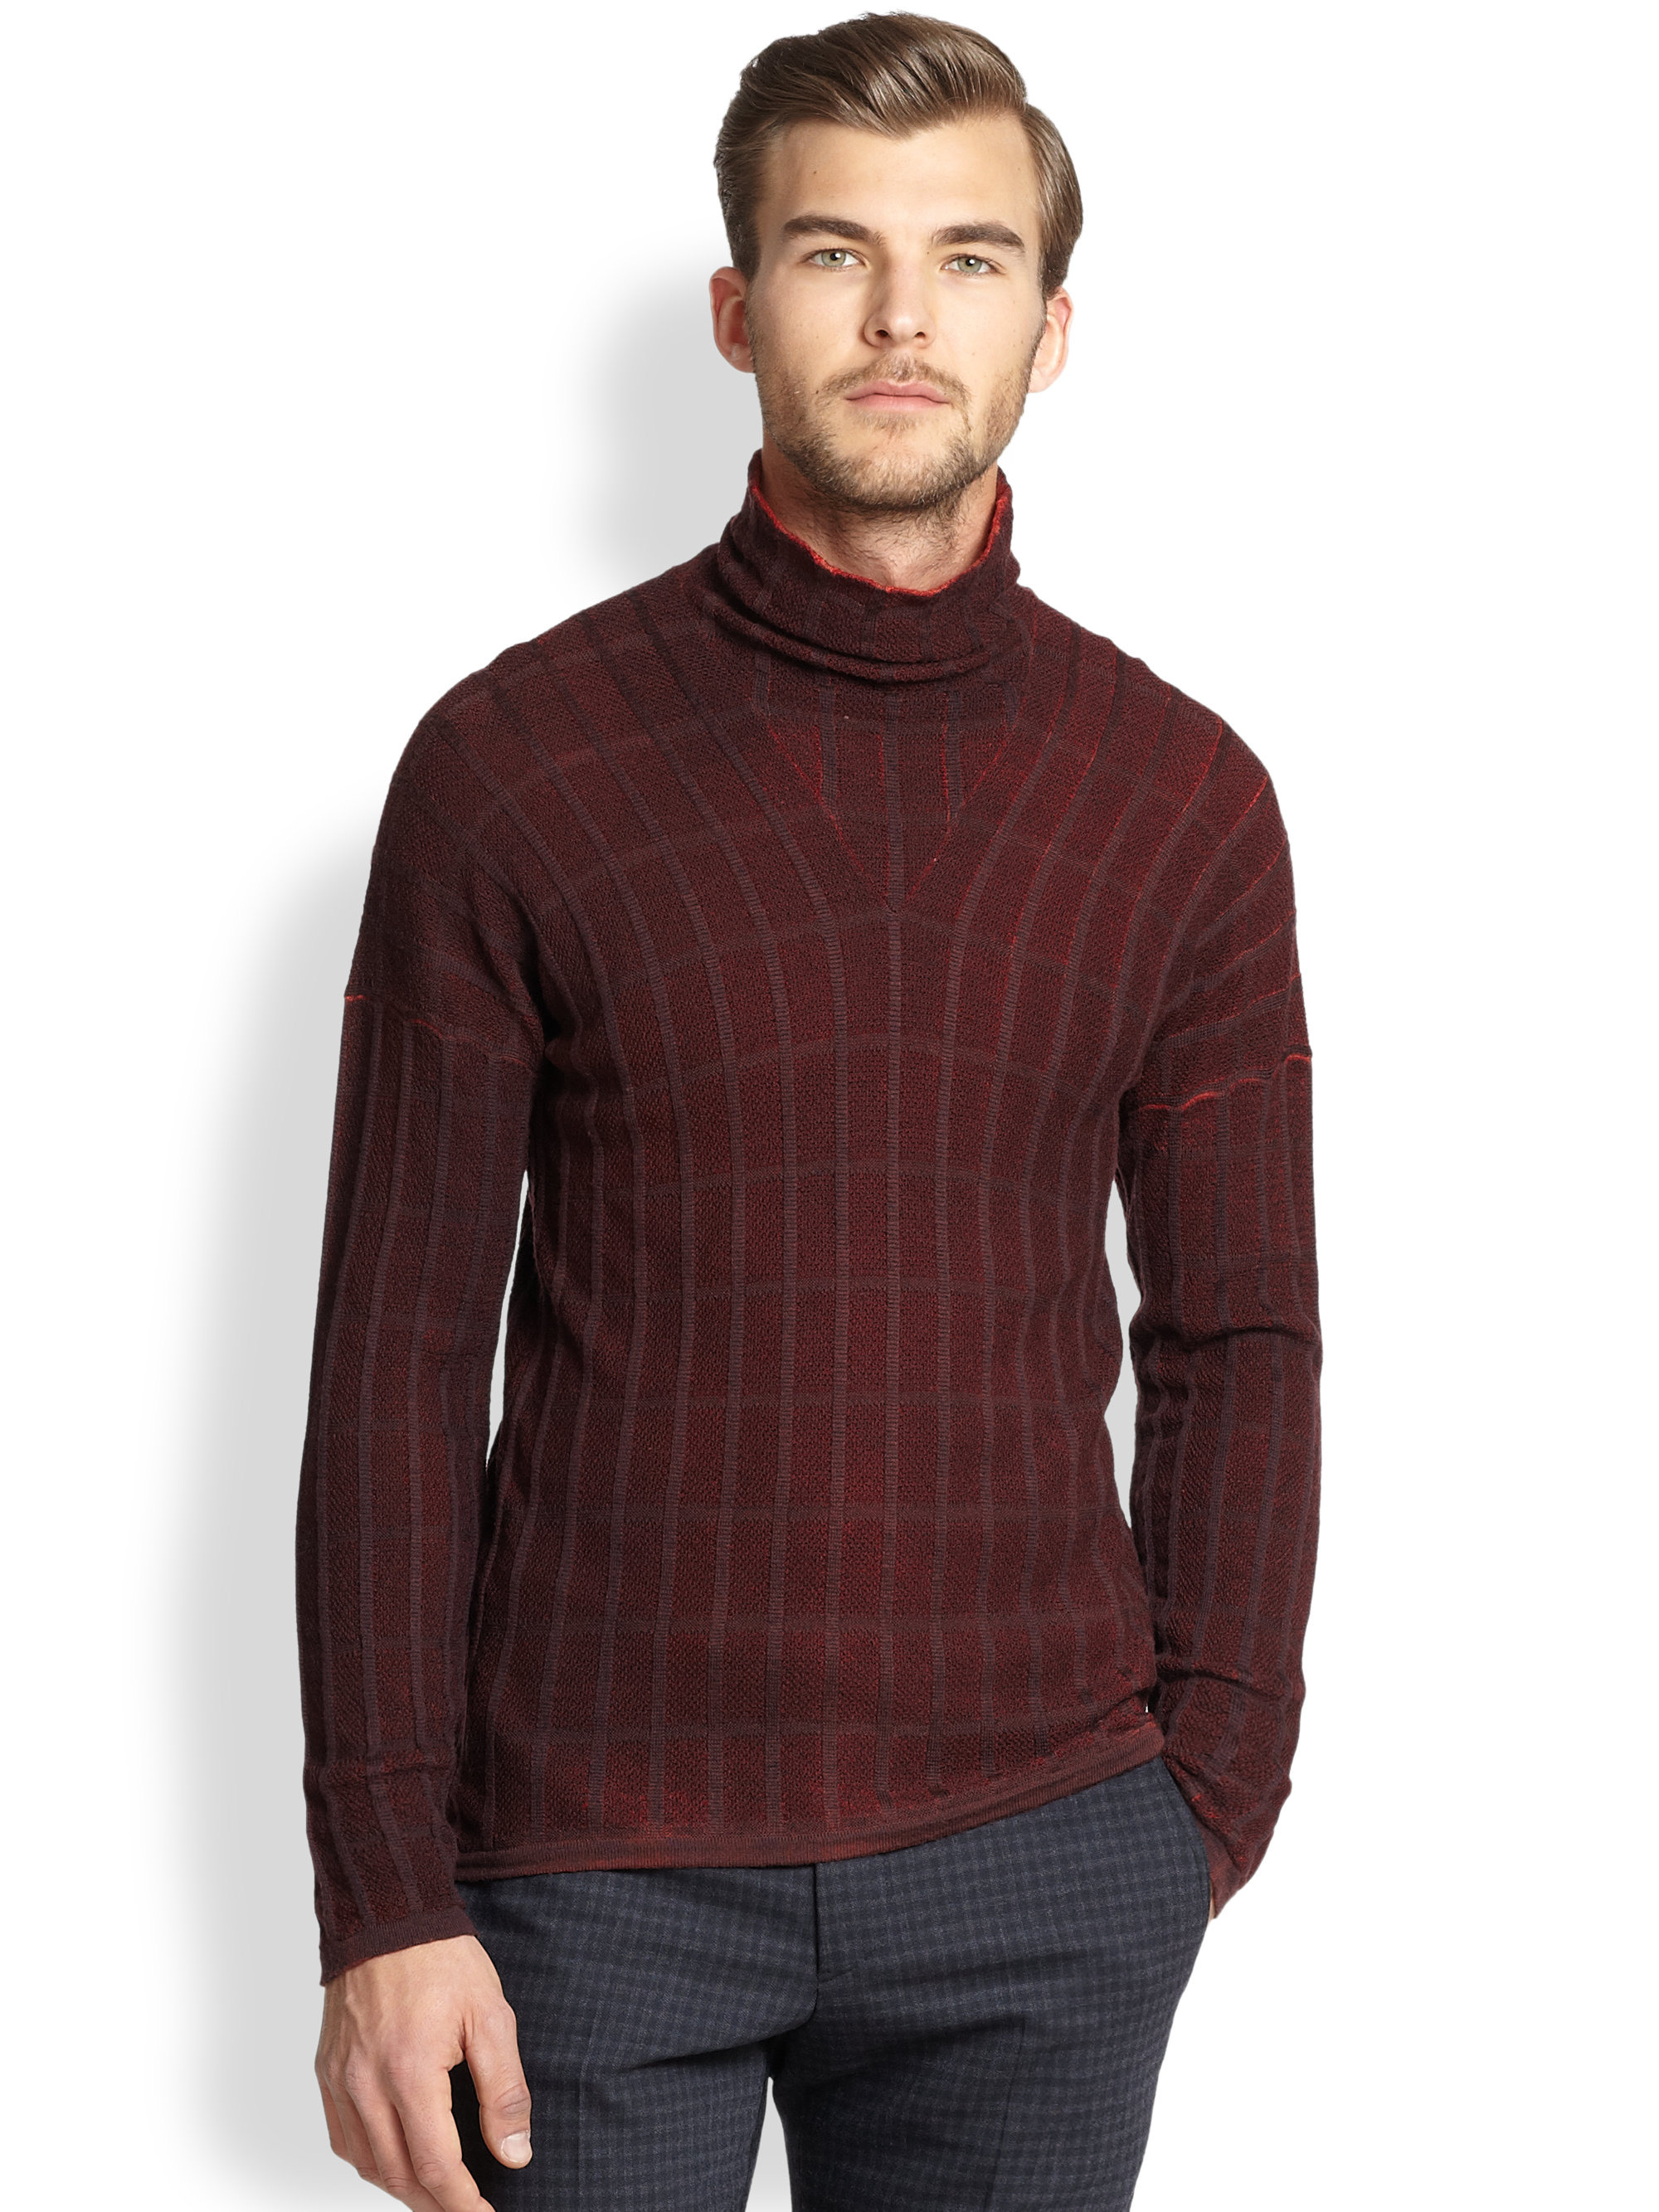 Armani Turtleneck Sweater  in Burgundy Brown for Men  Lyst